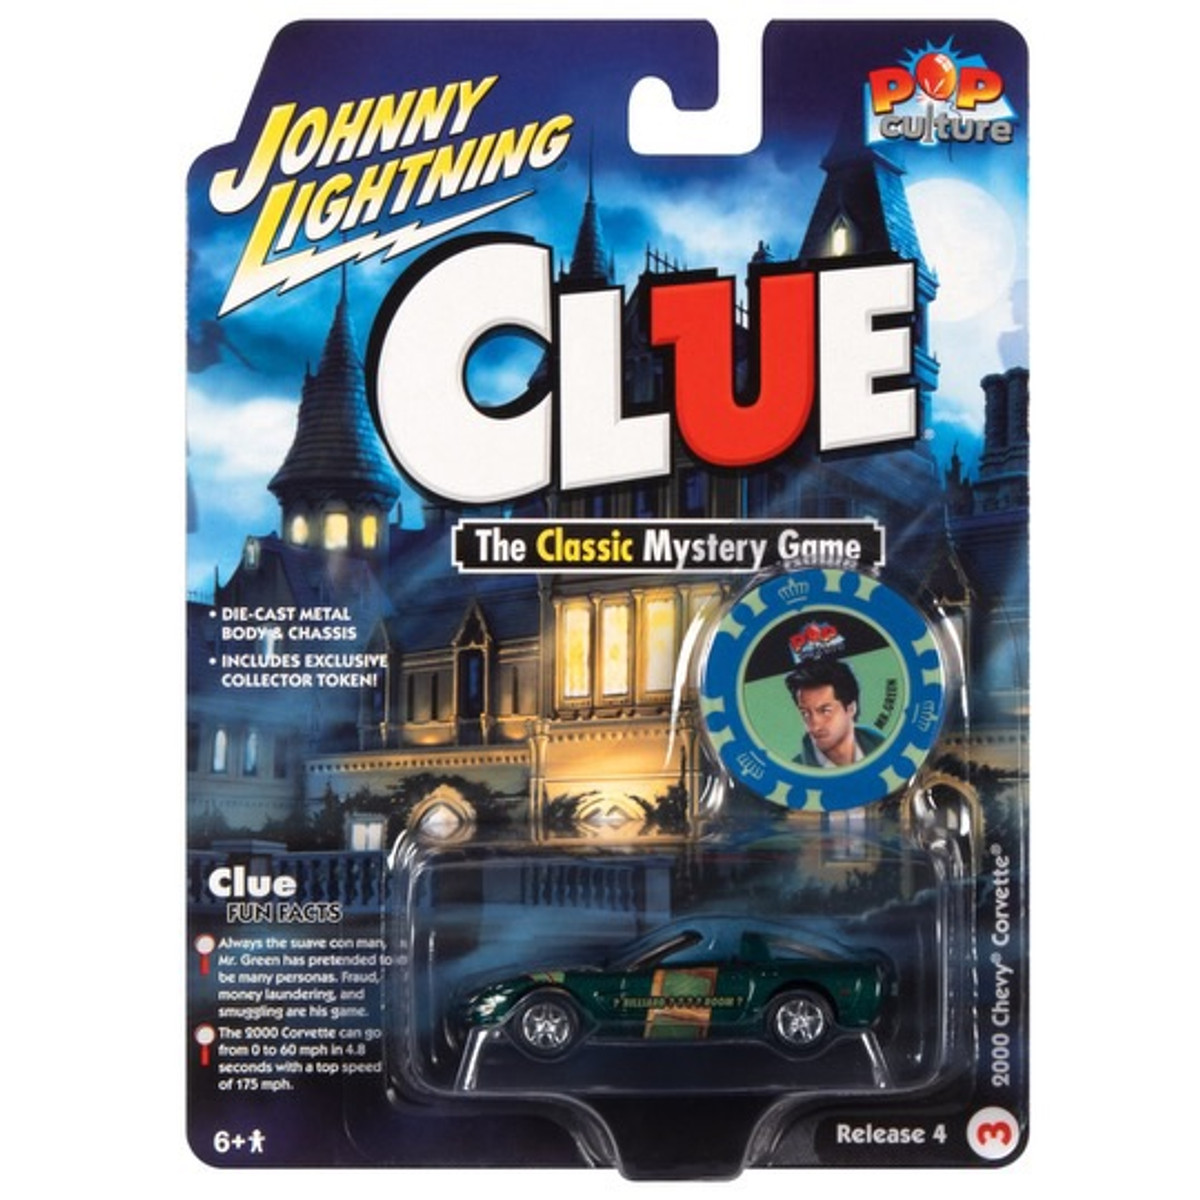 2022 Johnny Lightning Pop Culture Clue 2000 Chevy Corvette Release 4